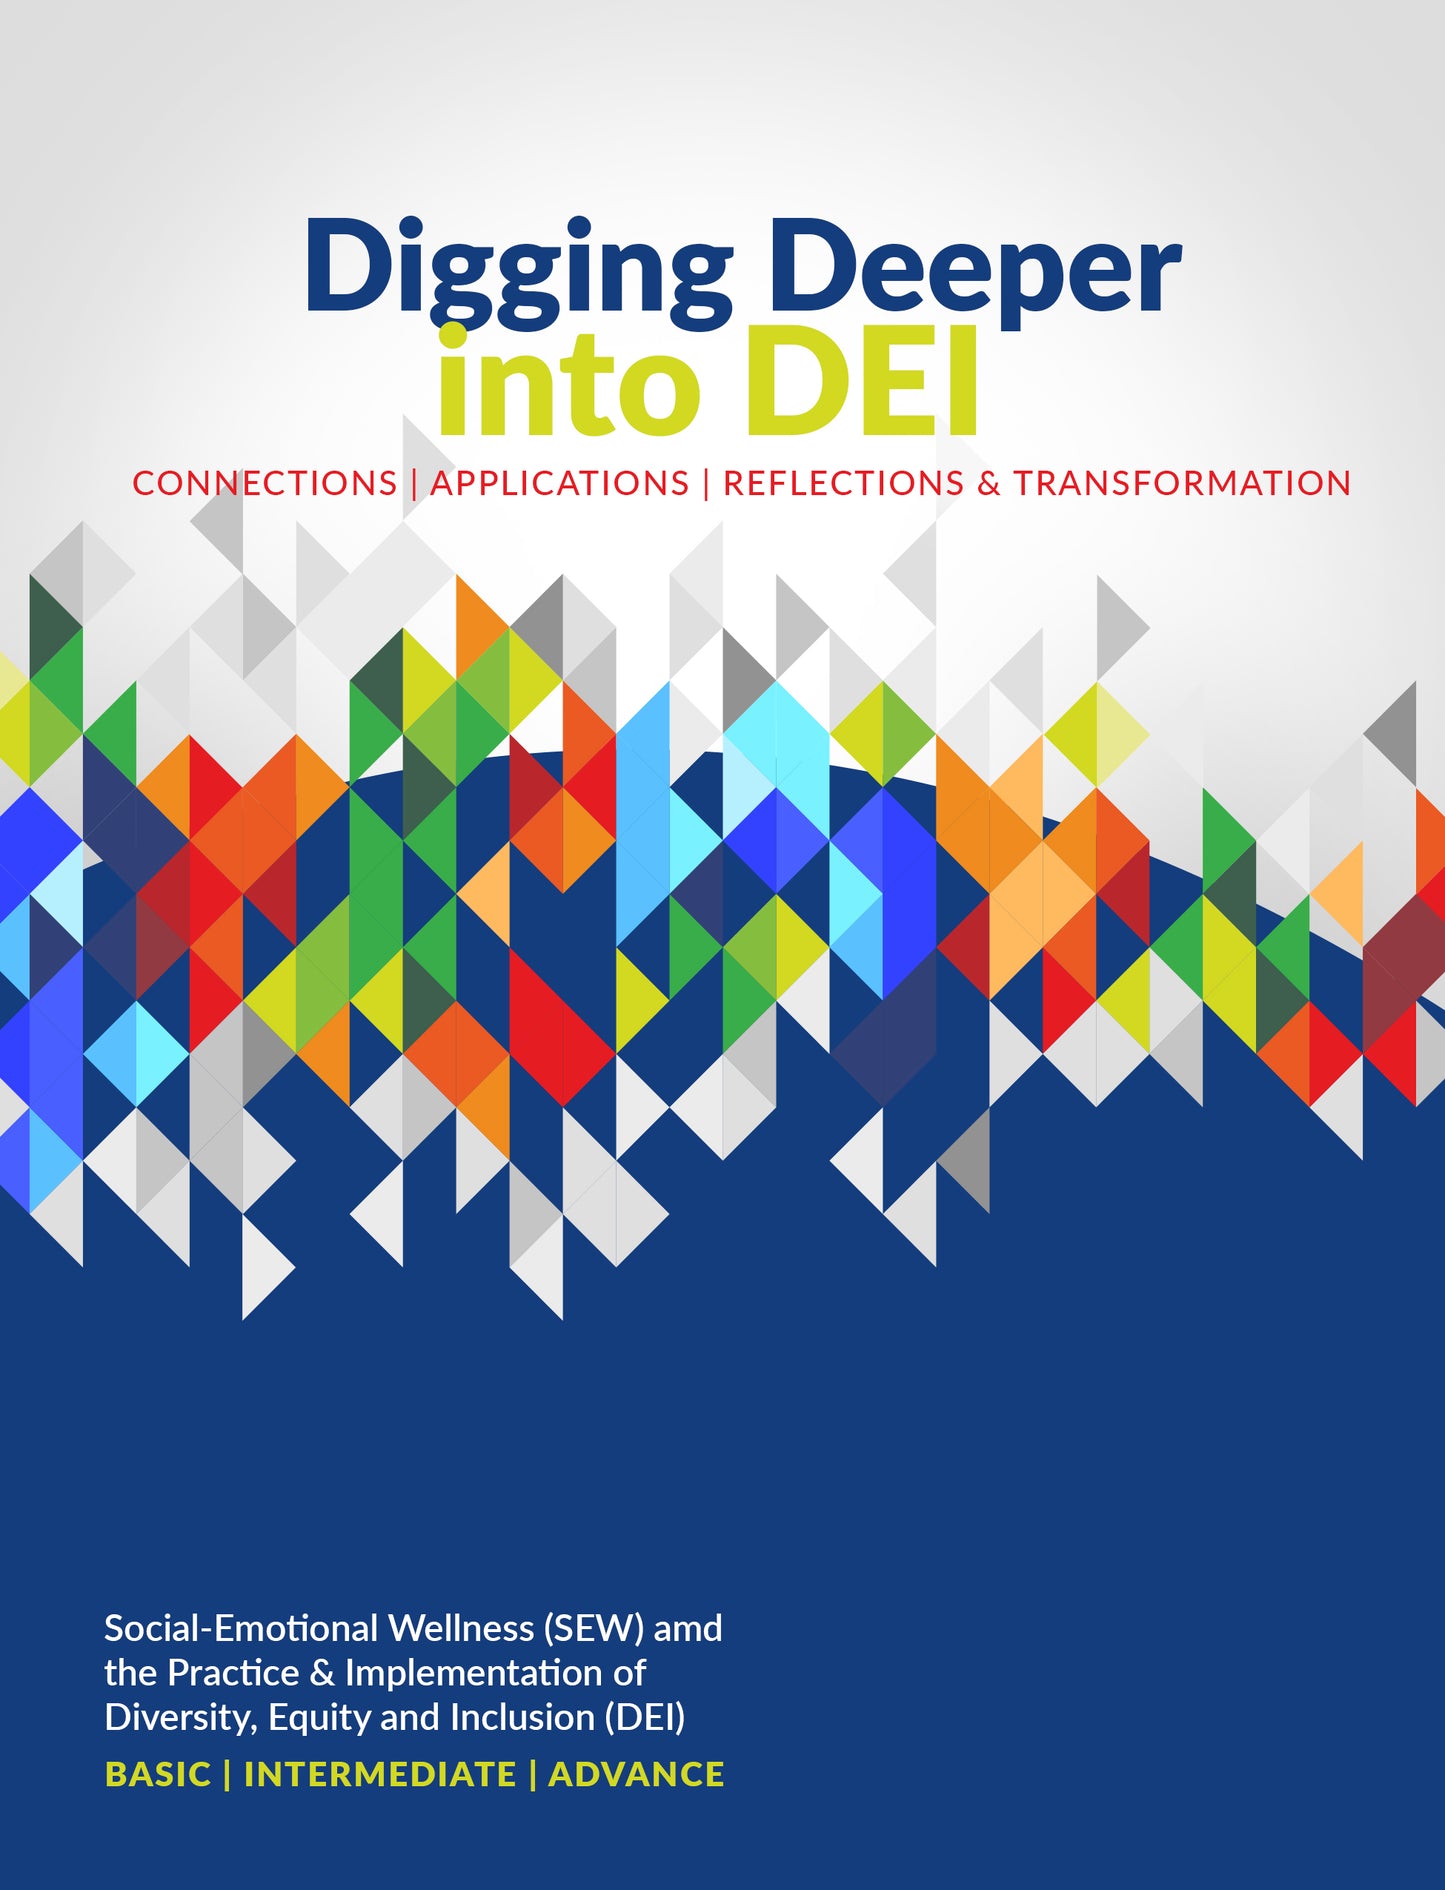 Digging Deep into DEI Training & Manual